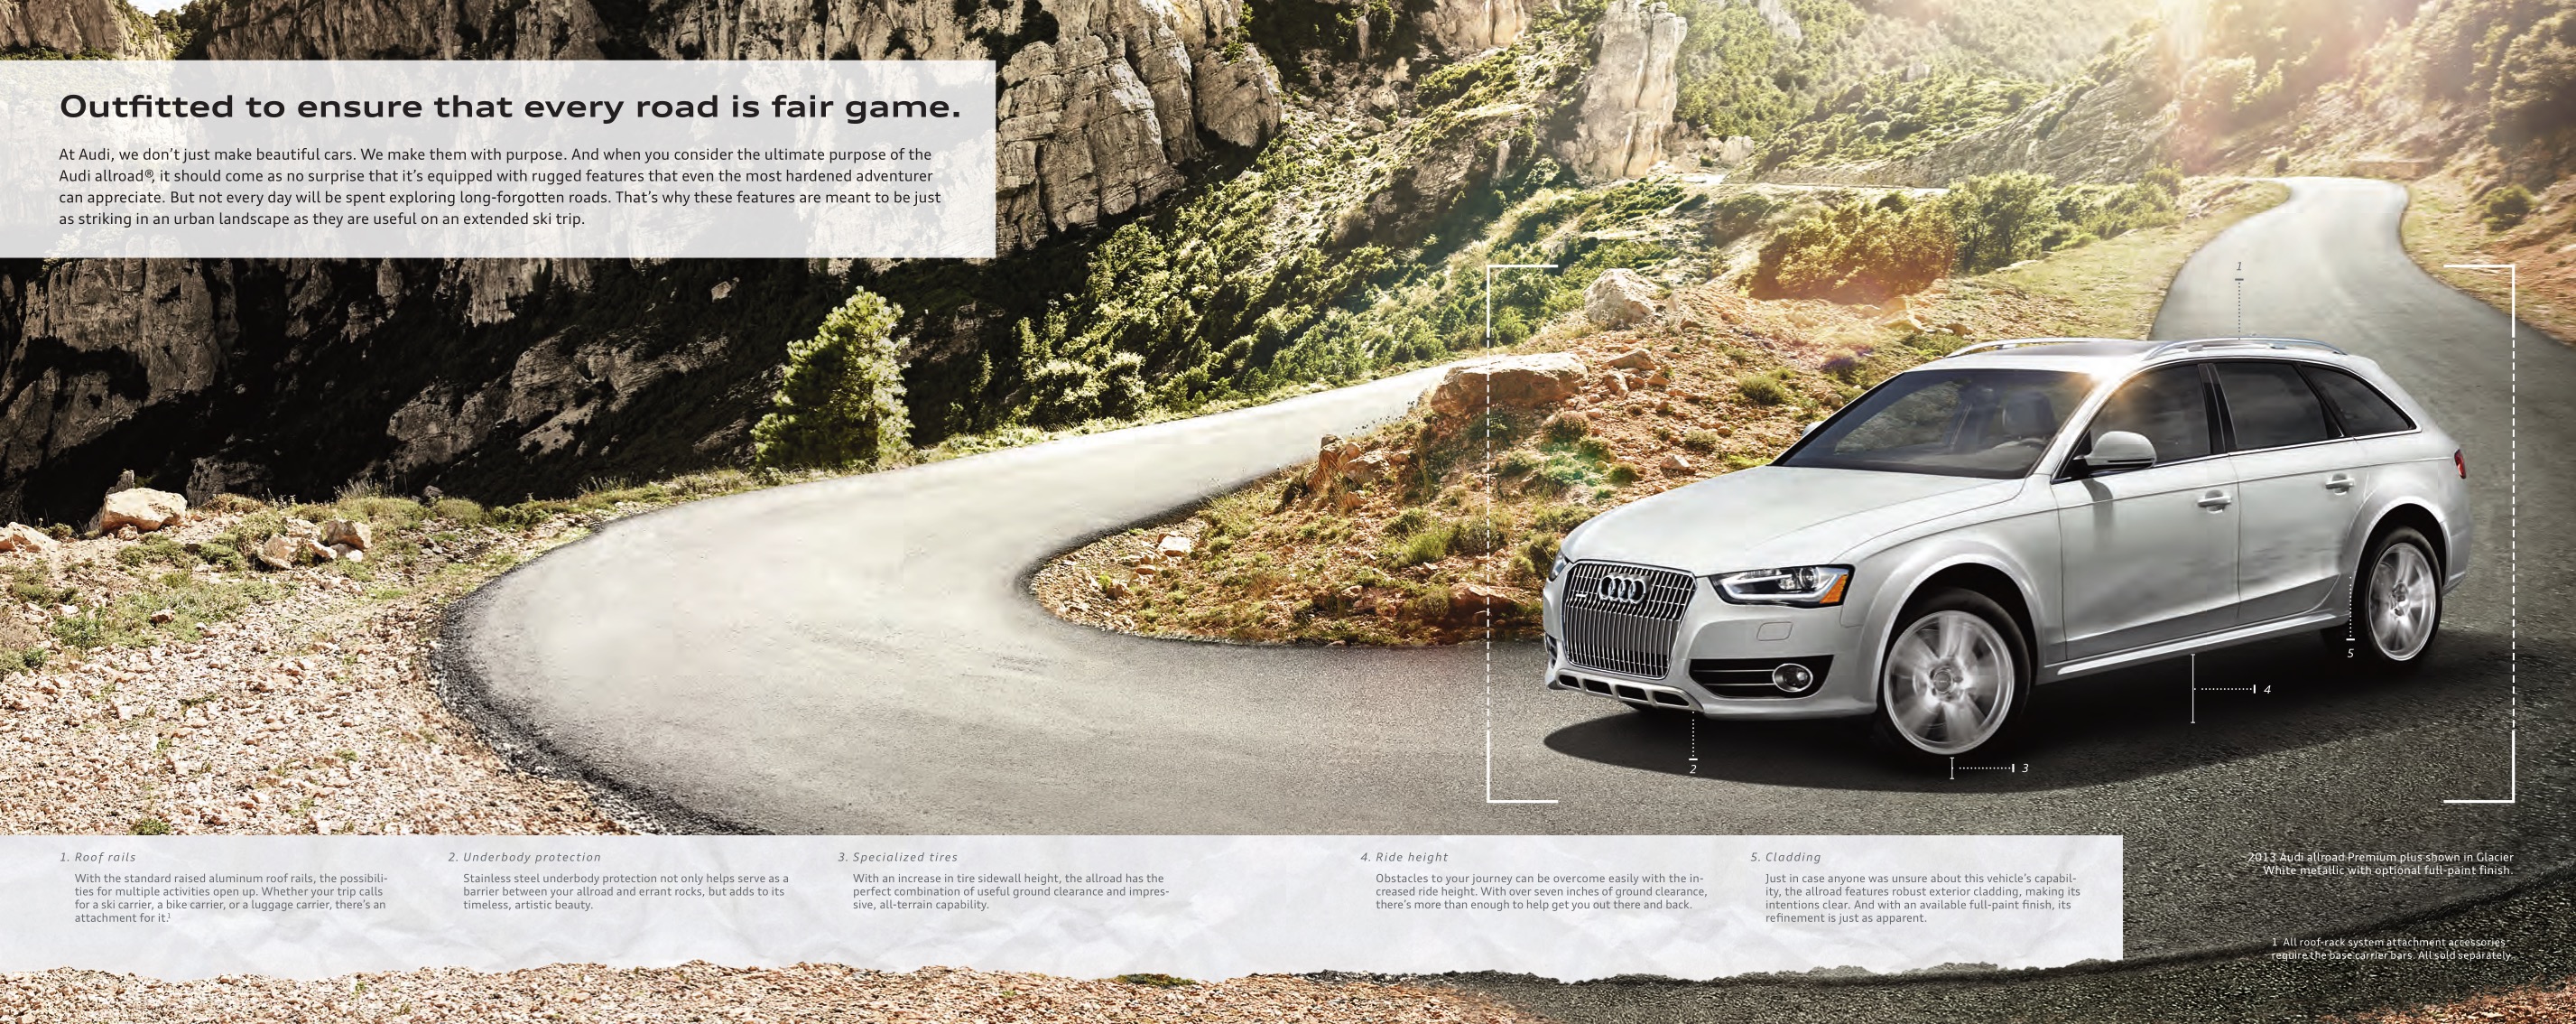 2013 Audi Allroad Brochure Page 6